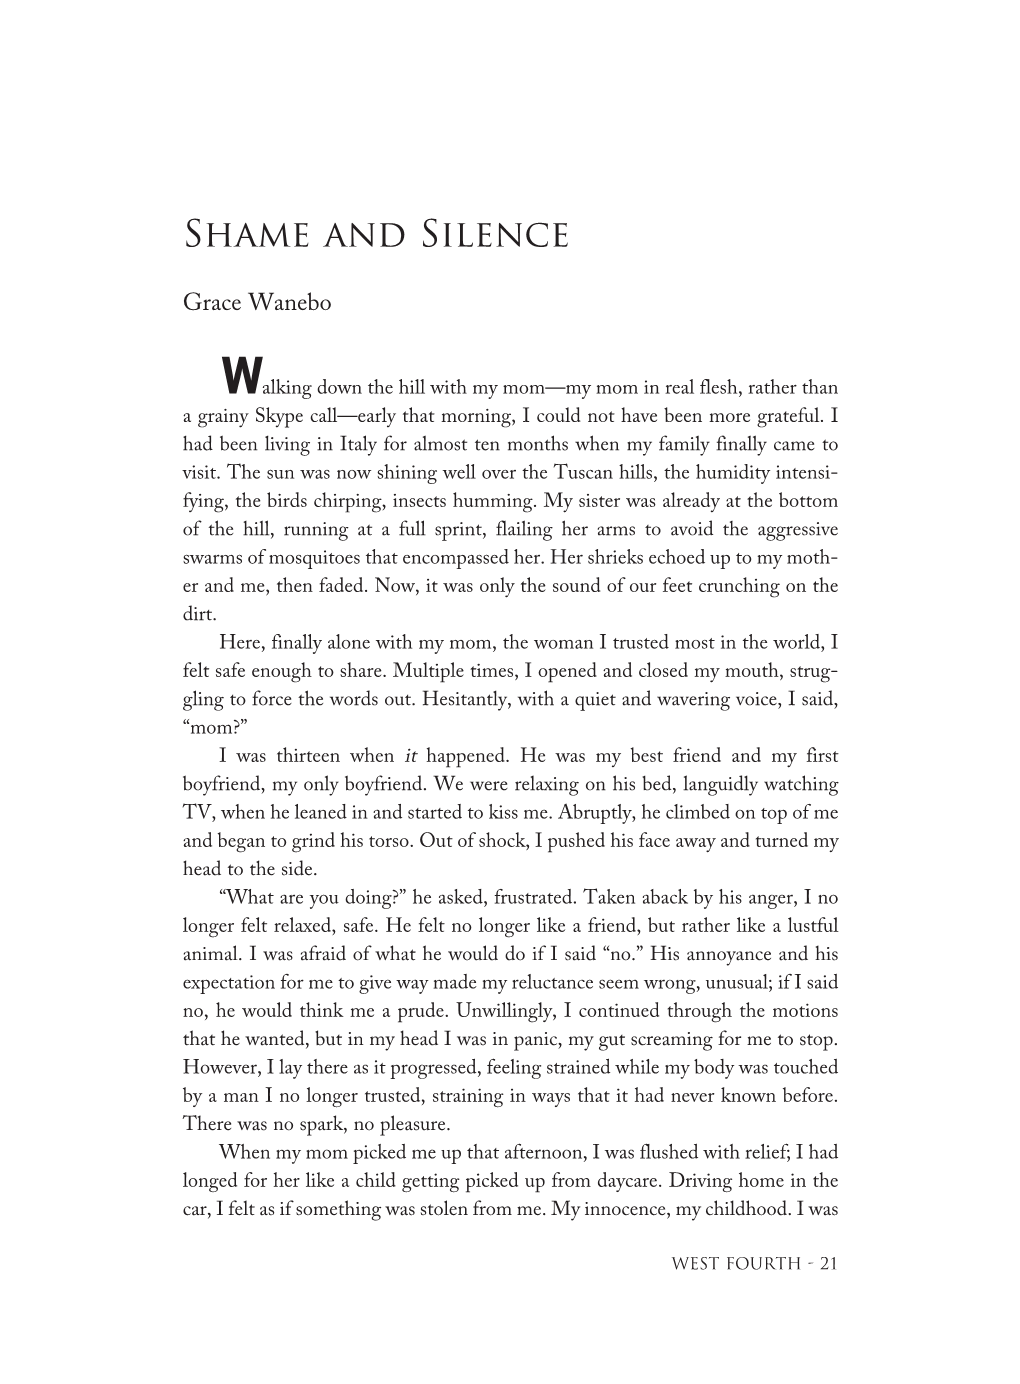 Shame and Silence